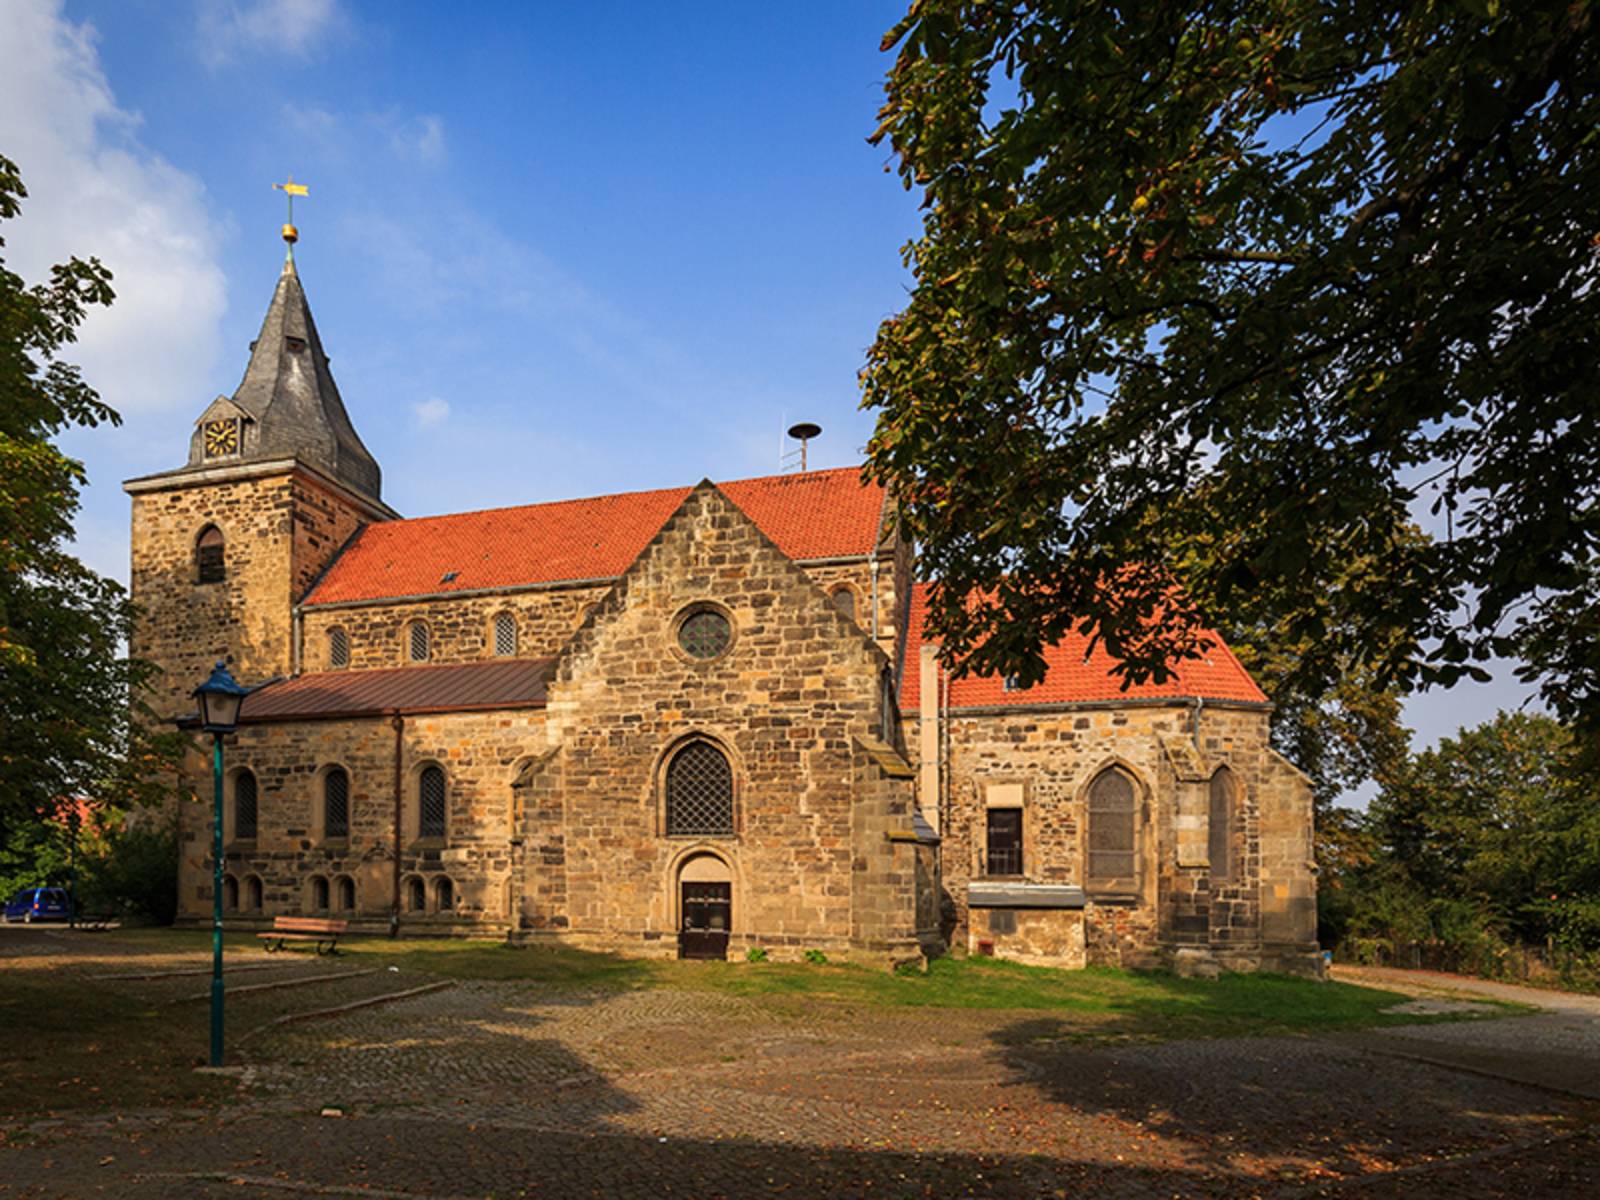  Michaeliskirche in Ronnenberg